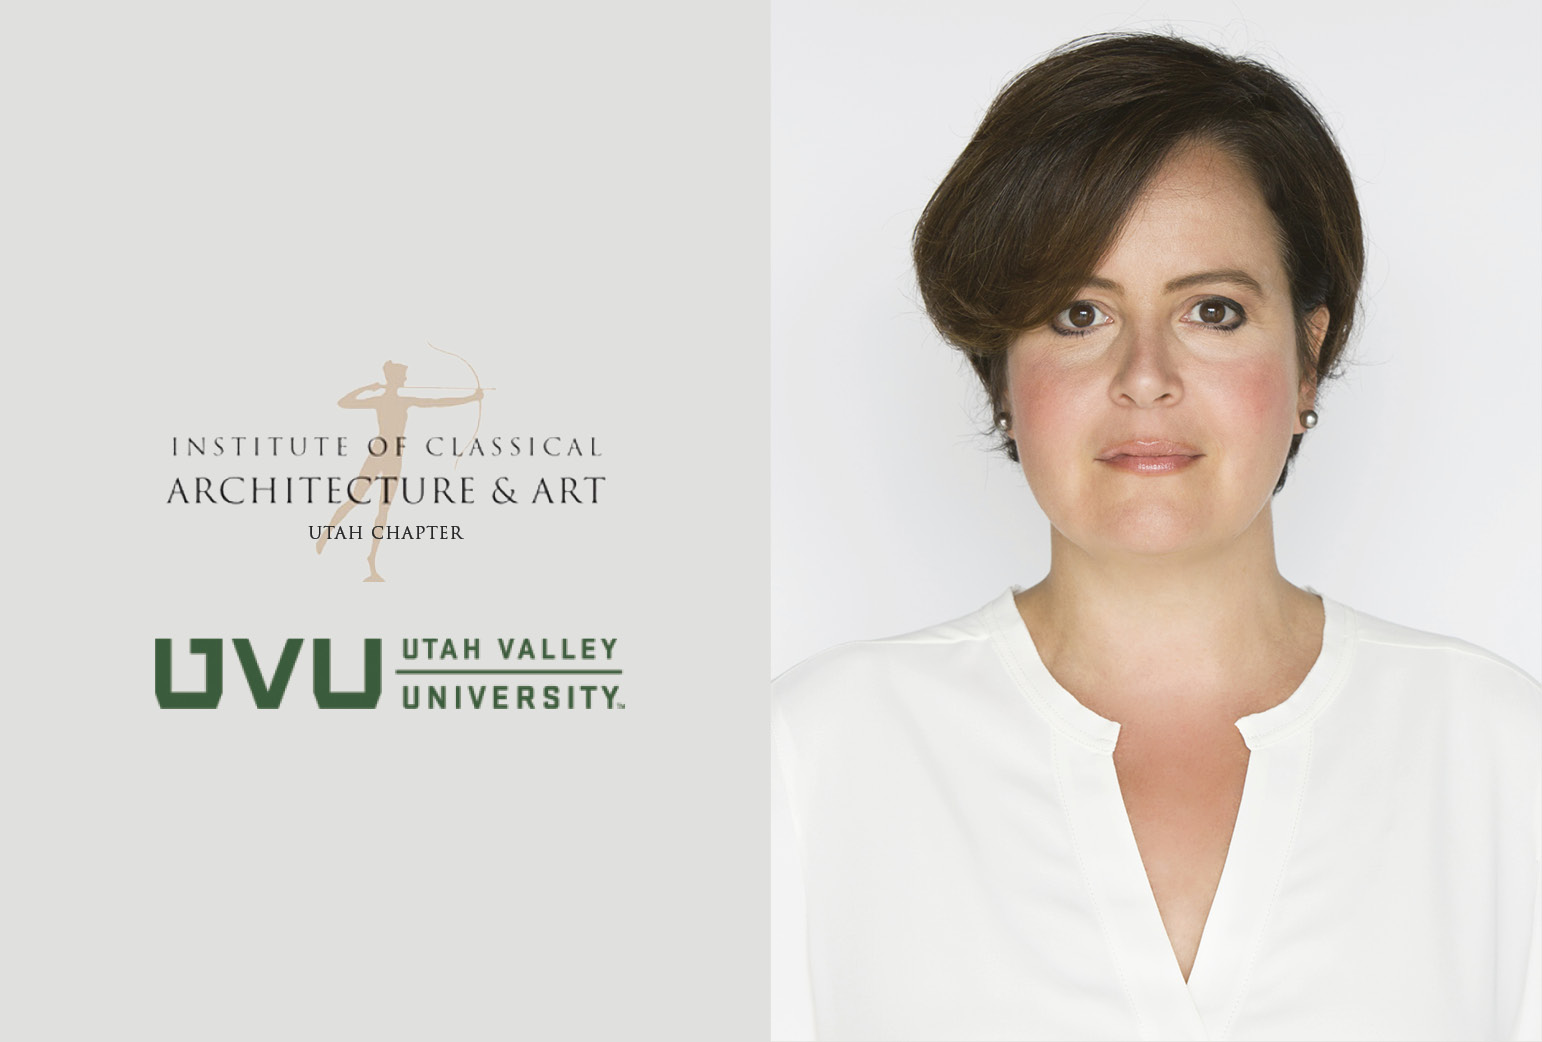 Melissa DelVecchio Discusses Project Soane, Presented by Utah Valley University & ICAA Utah 